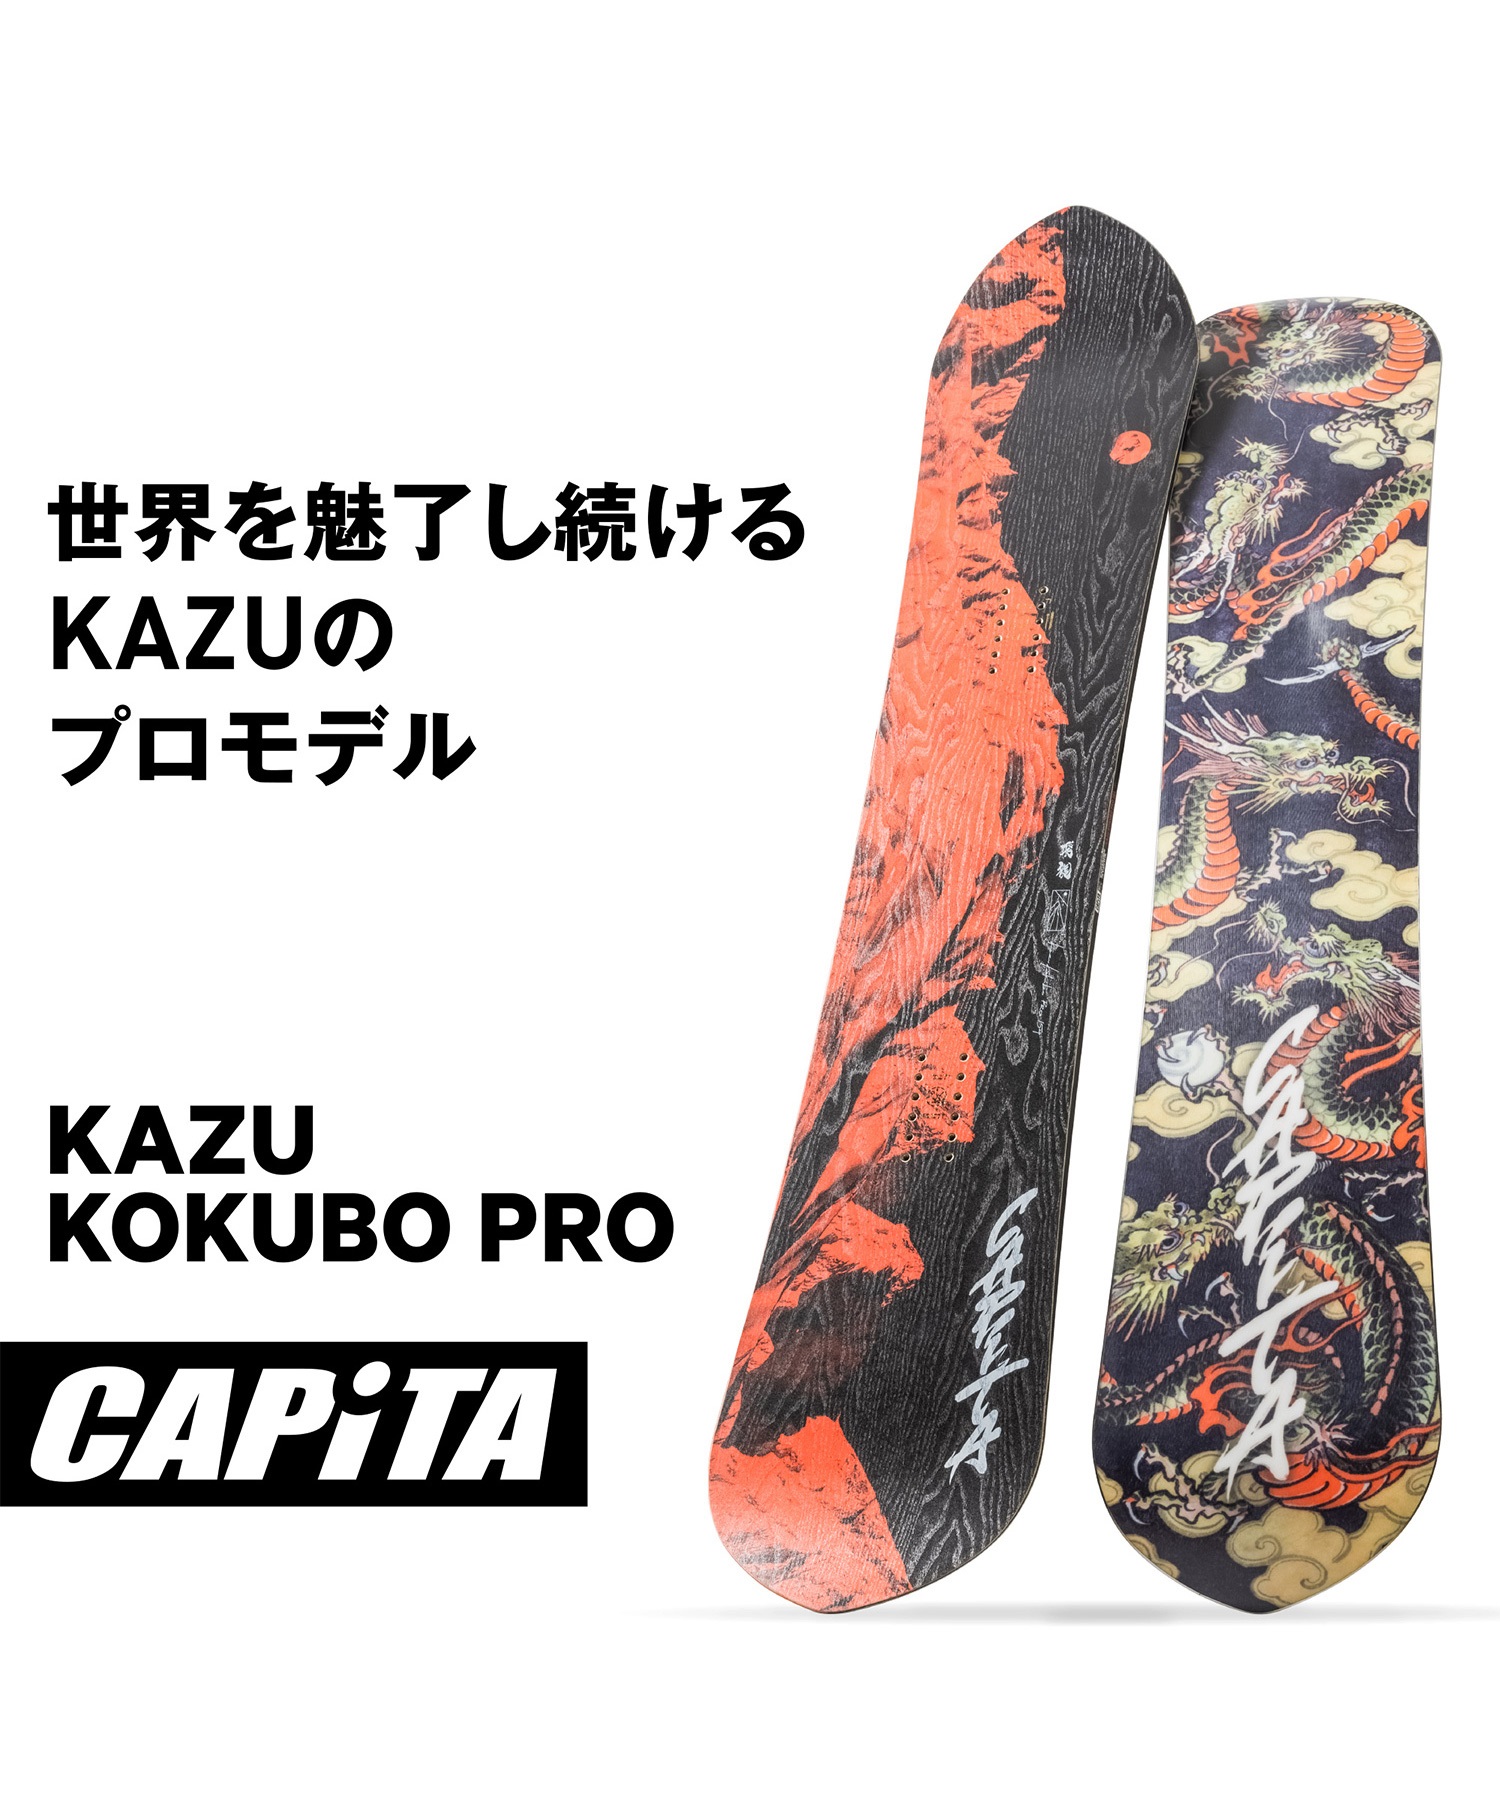 23-24 CAPITA KAZU KOKUBO PRO 157cmコメントありがとうございます